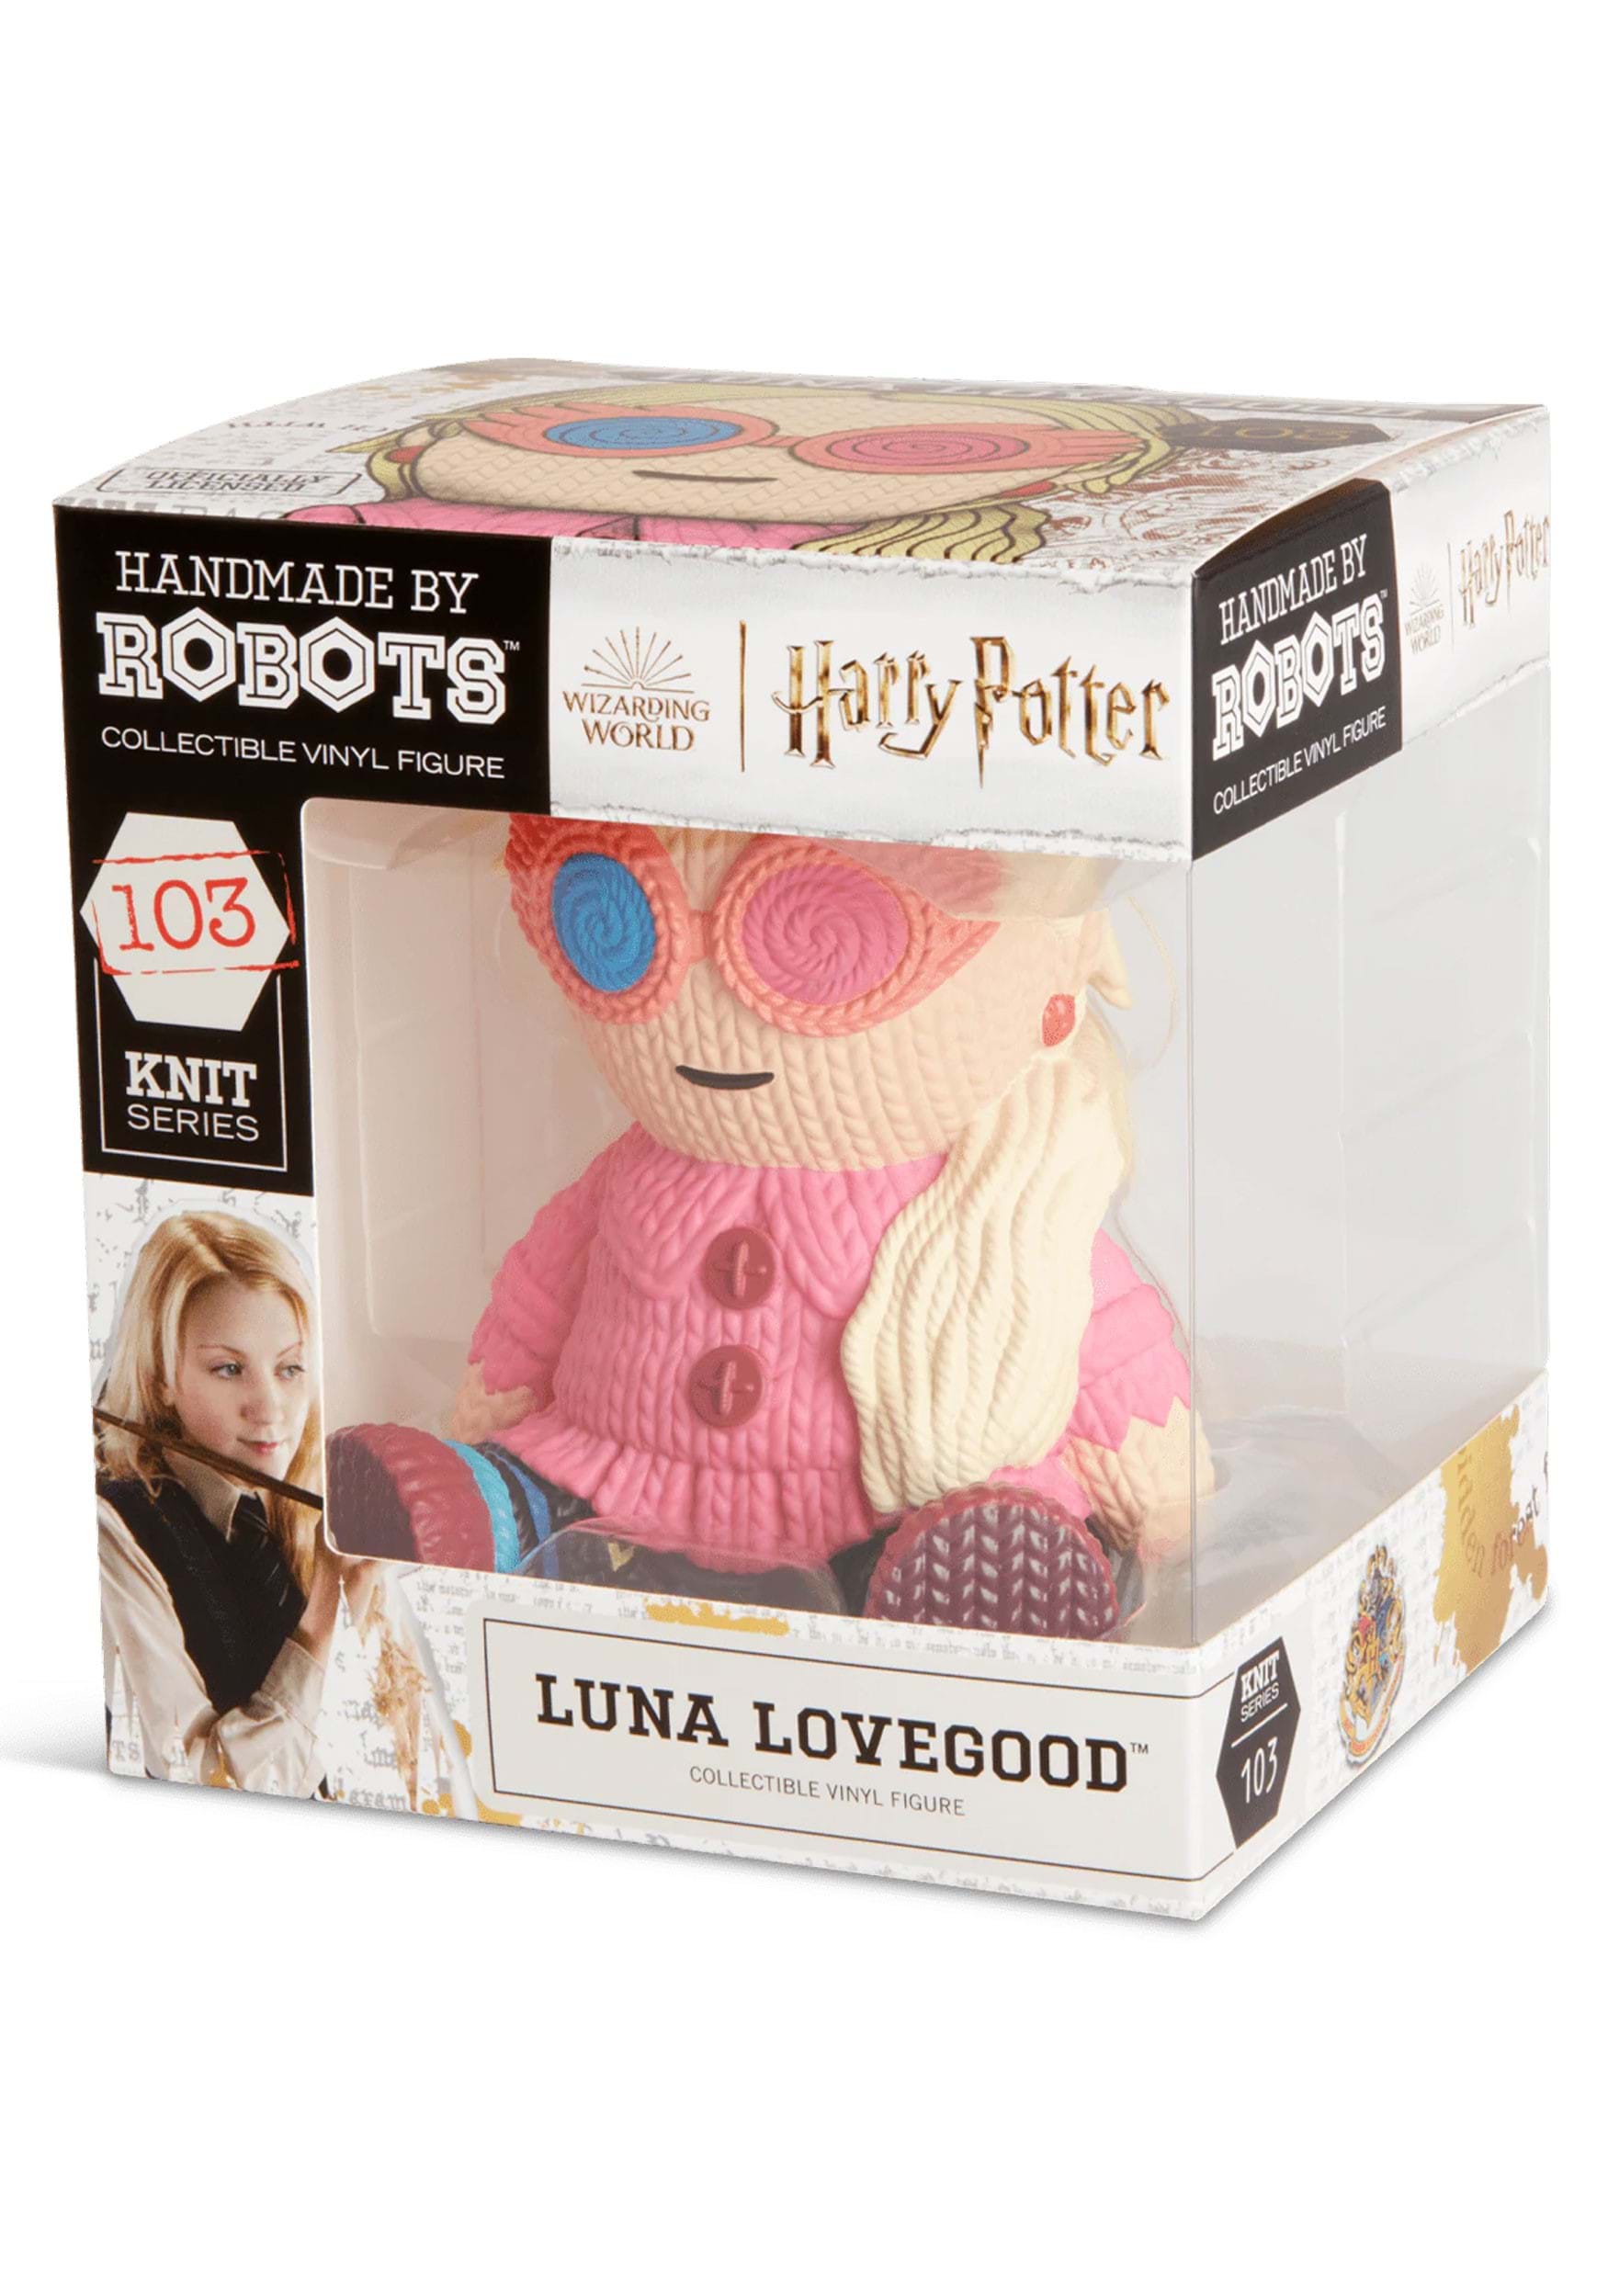 Wizarding World Luna Lovegood Handmade By Robots Vinyl Figure